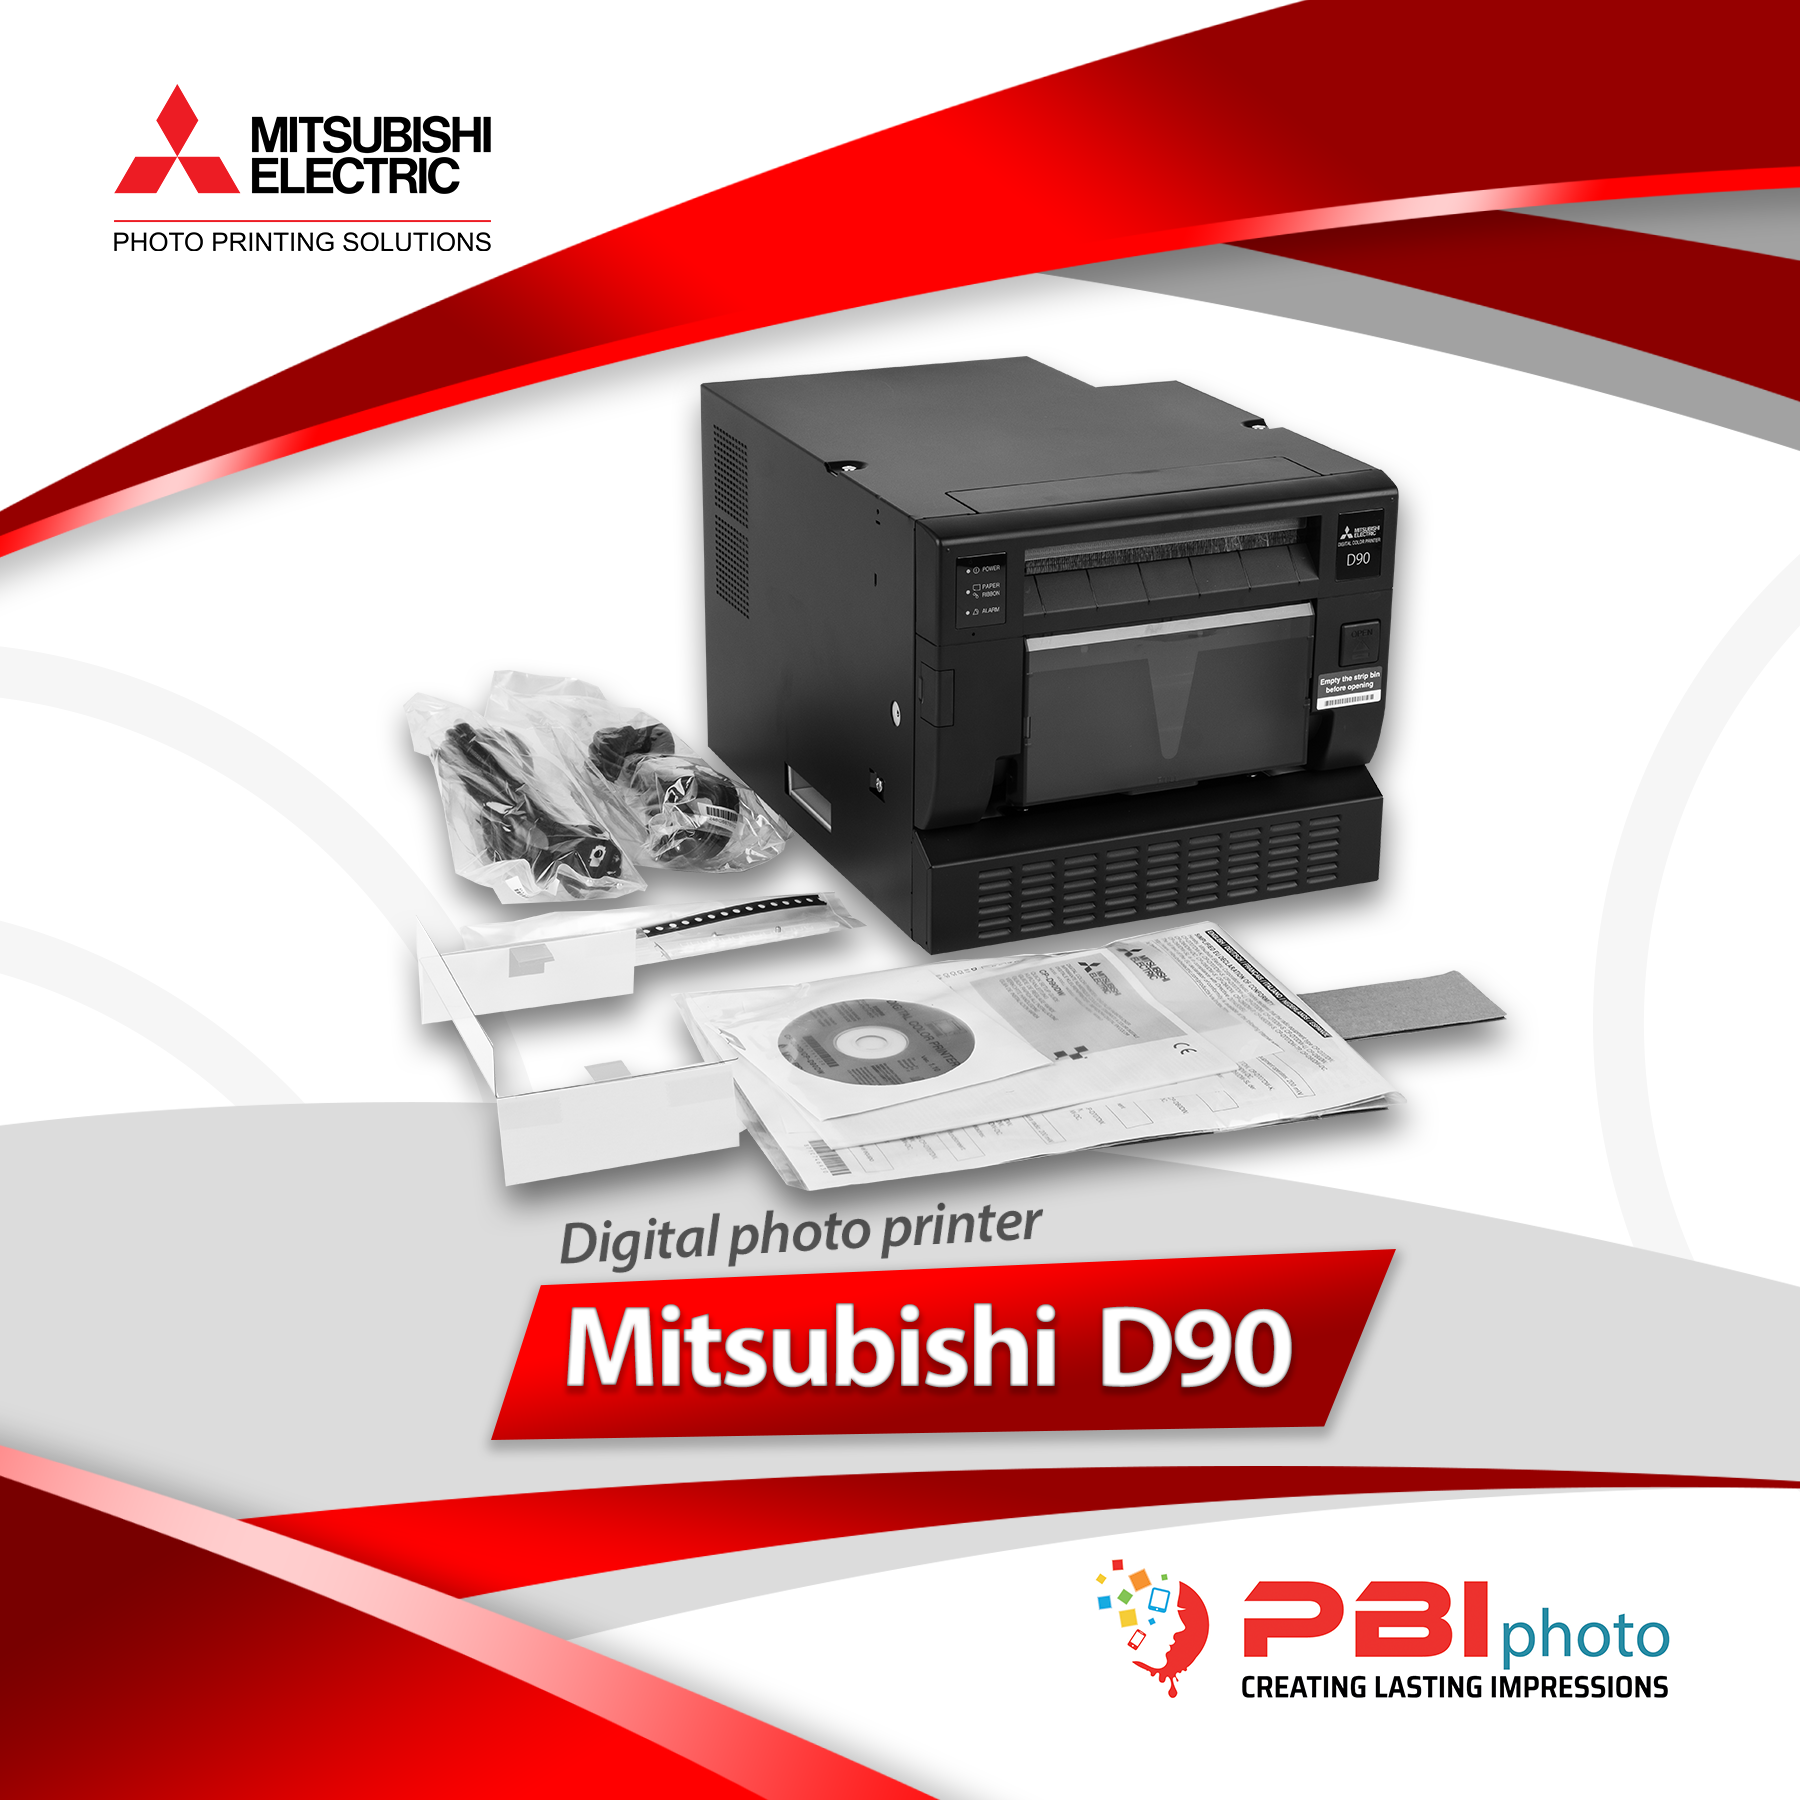 MITSUBISHI PRINTER CP-D90-P WITH MEDIA 860 PRINTS 4X6 KIT | PBI Photo